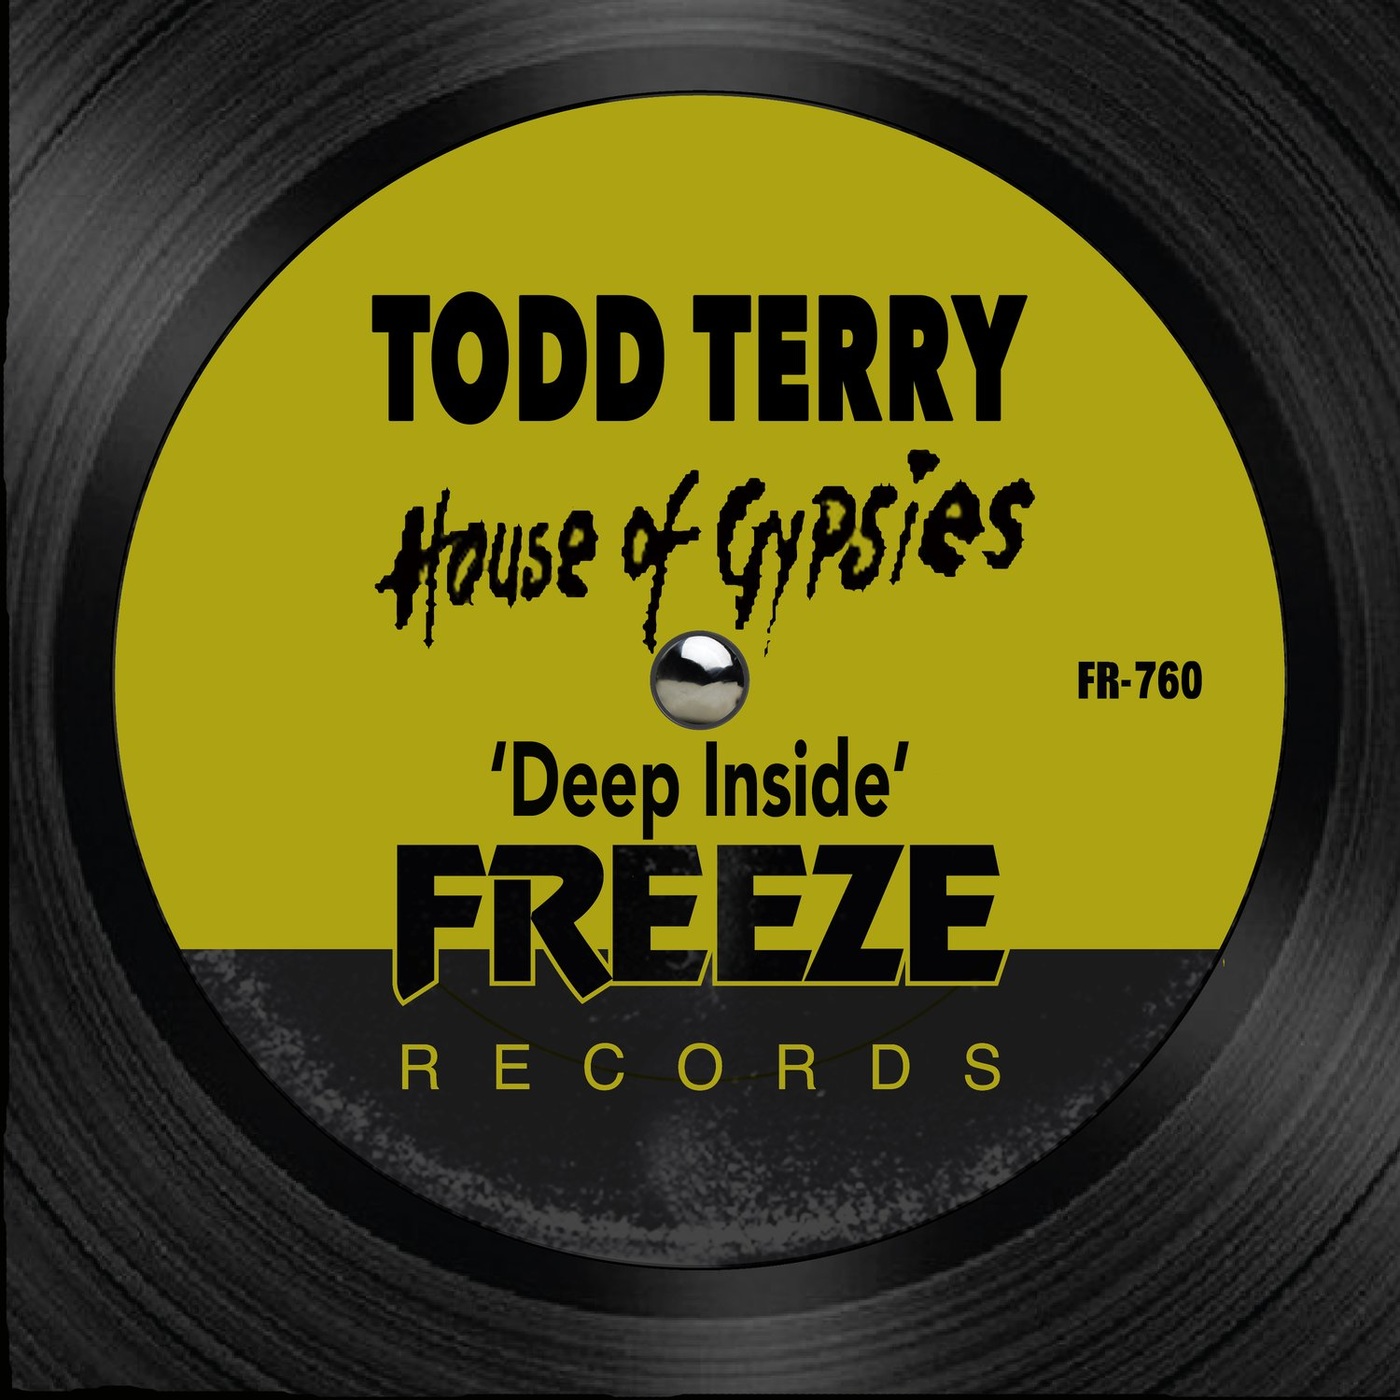 House of Gypsies, Todd Terry - Deep Inside [FR760]